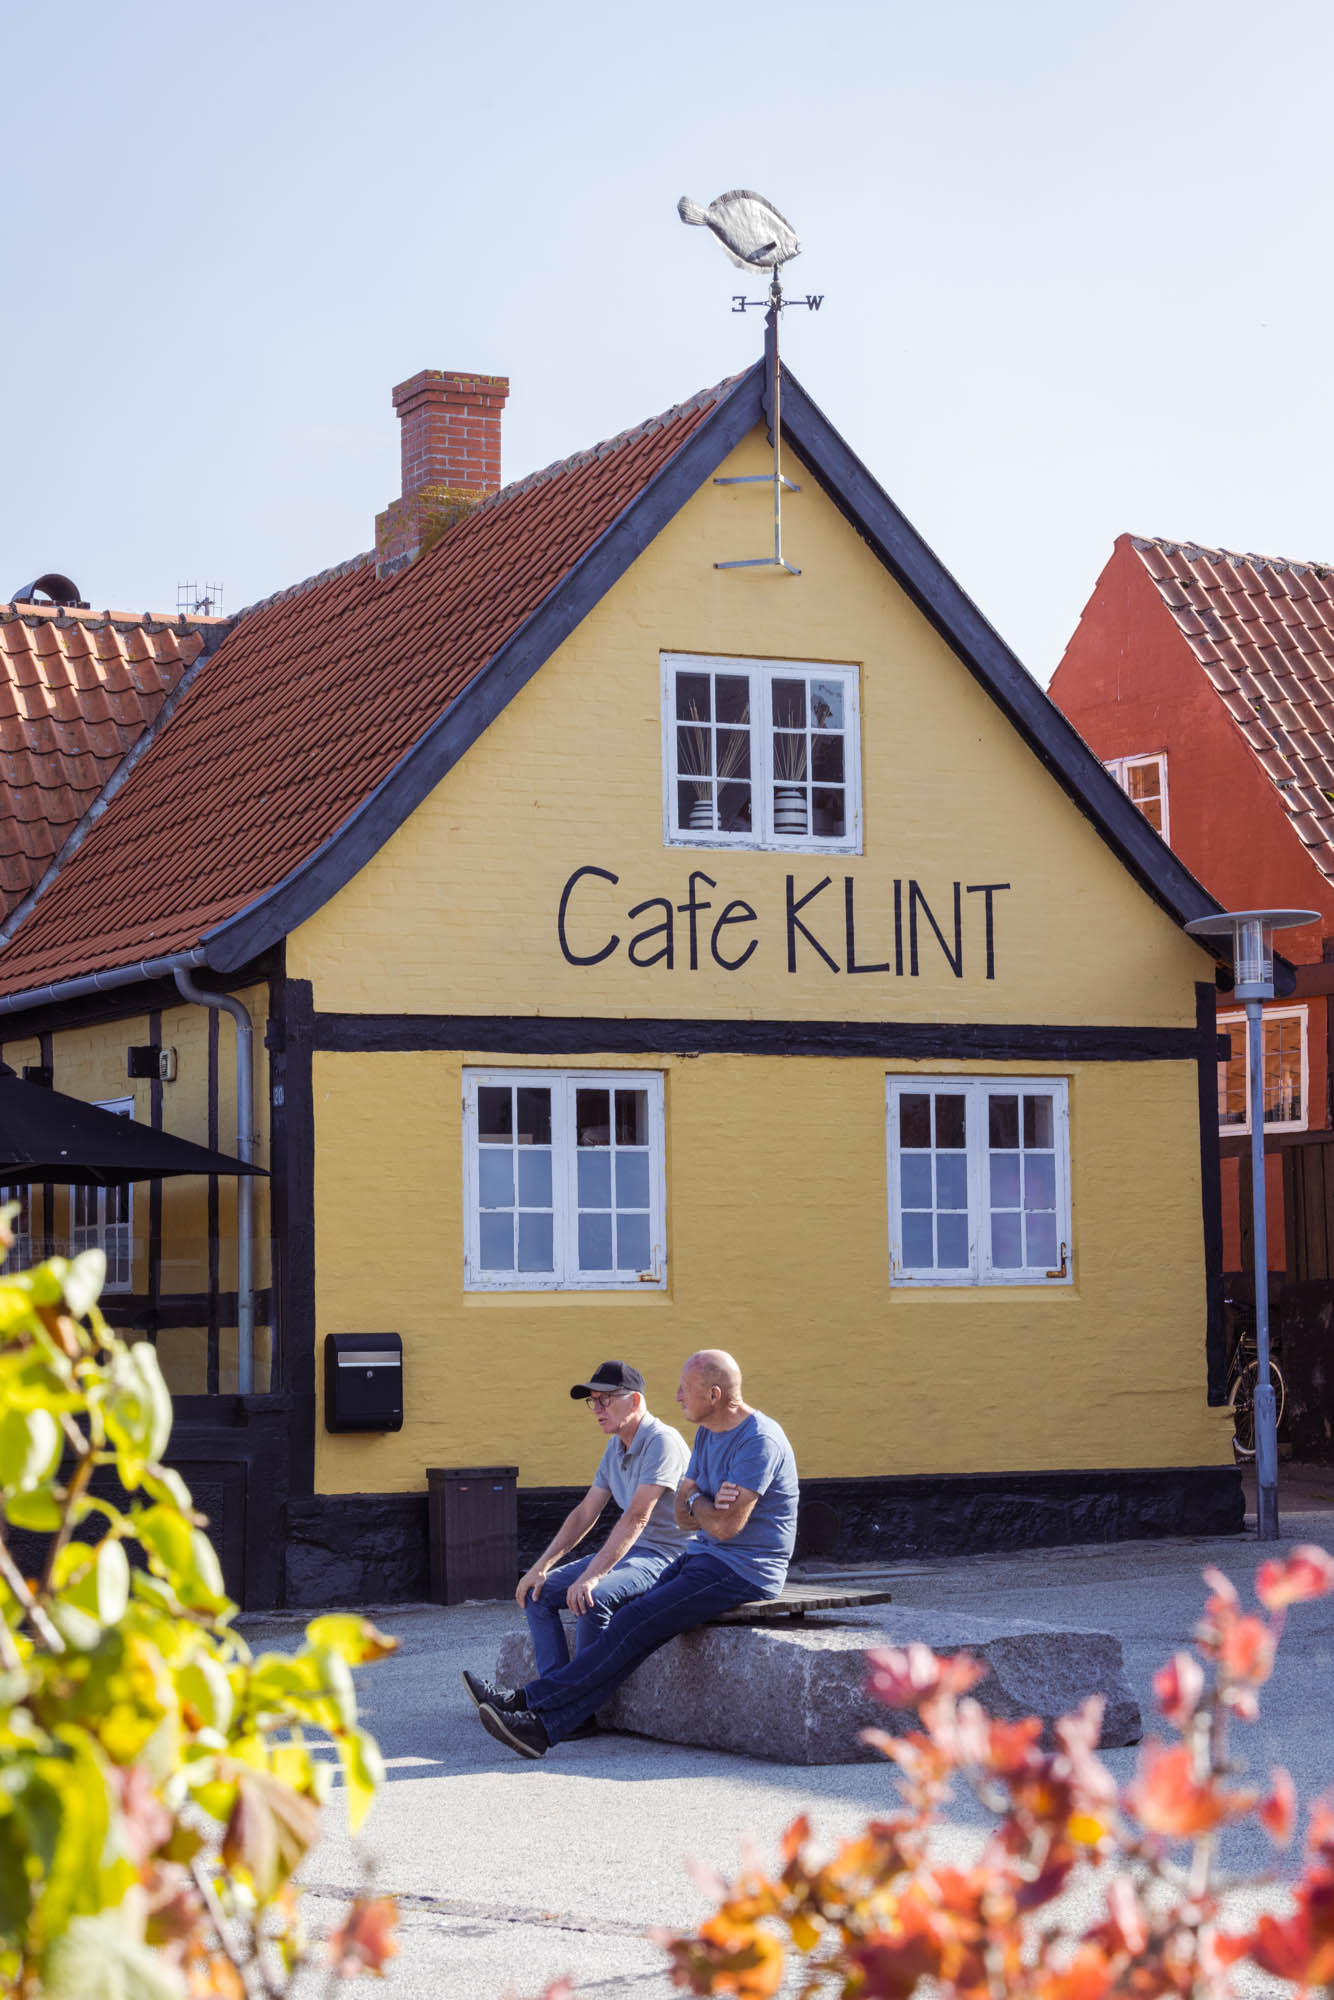 Café Klint in the habour of Gudhjem.